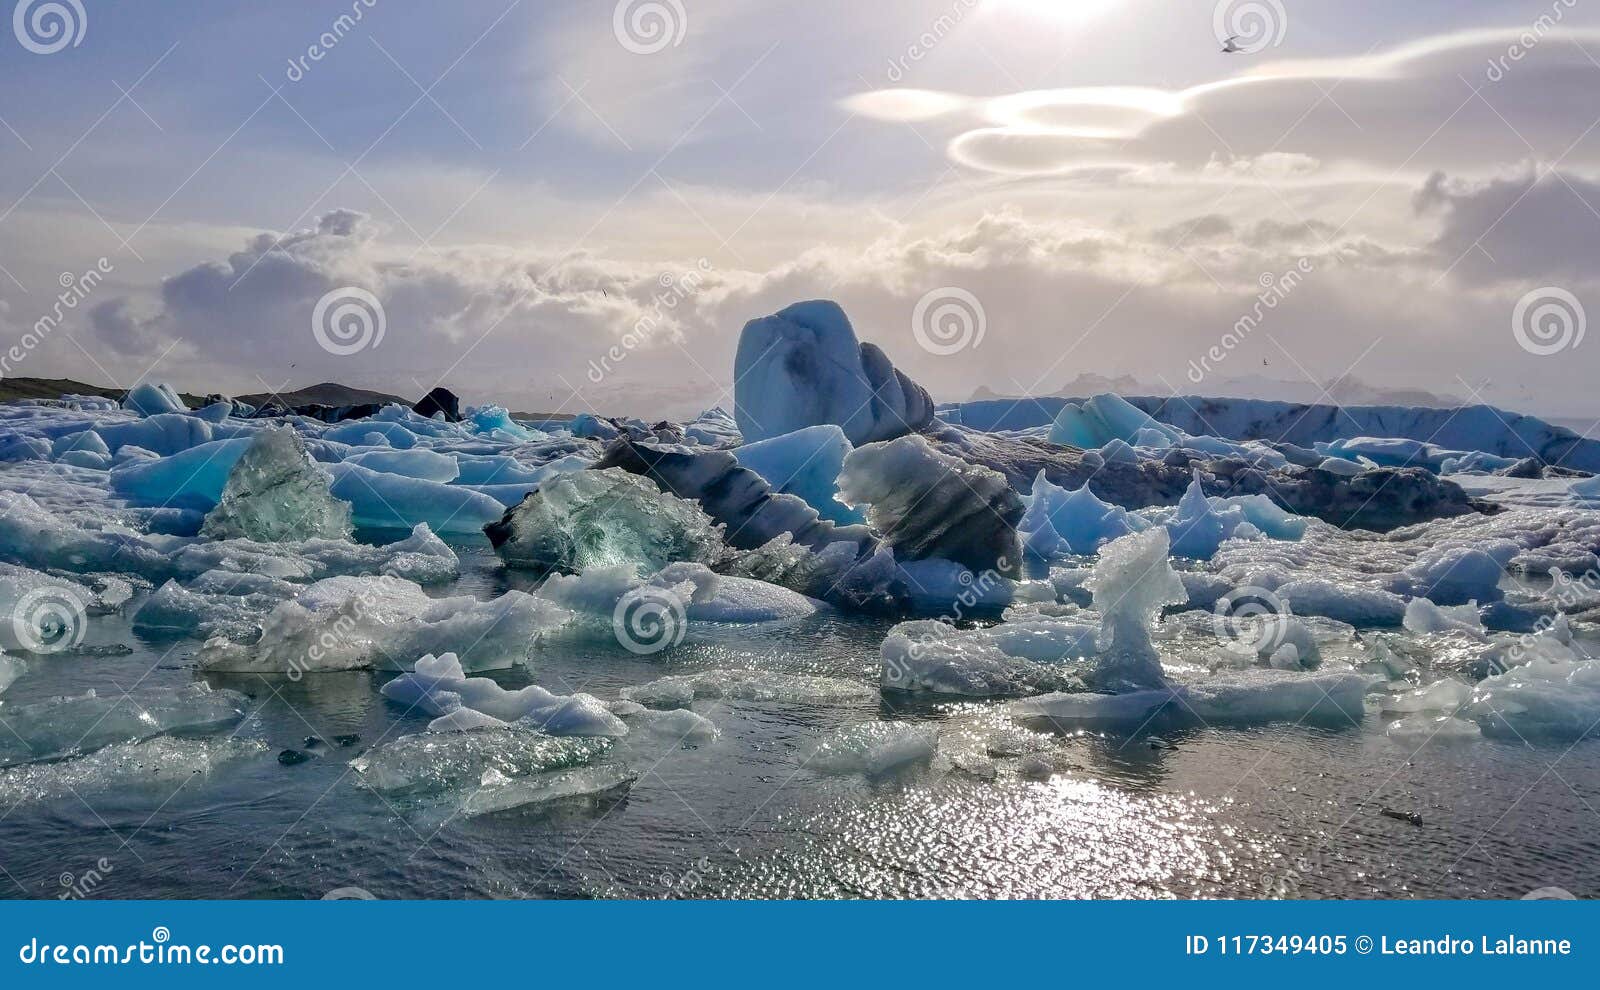 glaciar lagoon in iceland